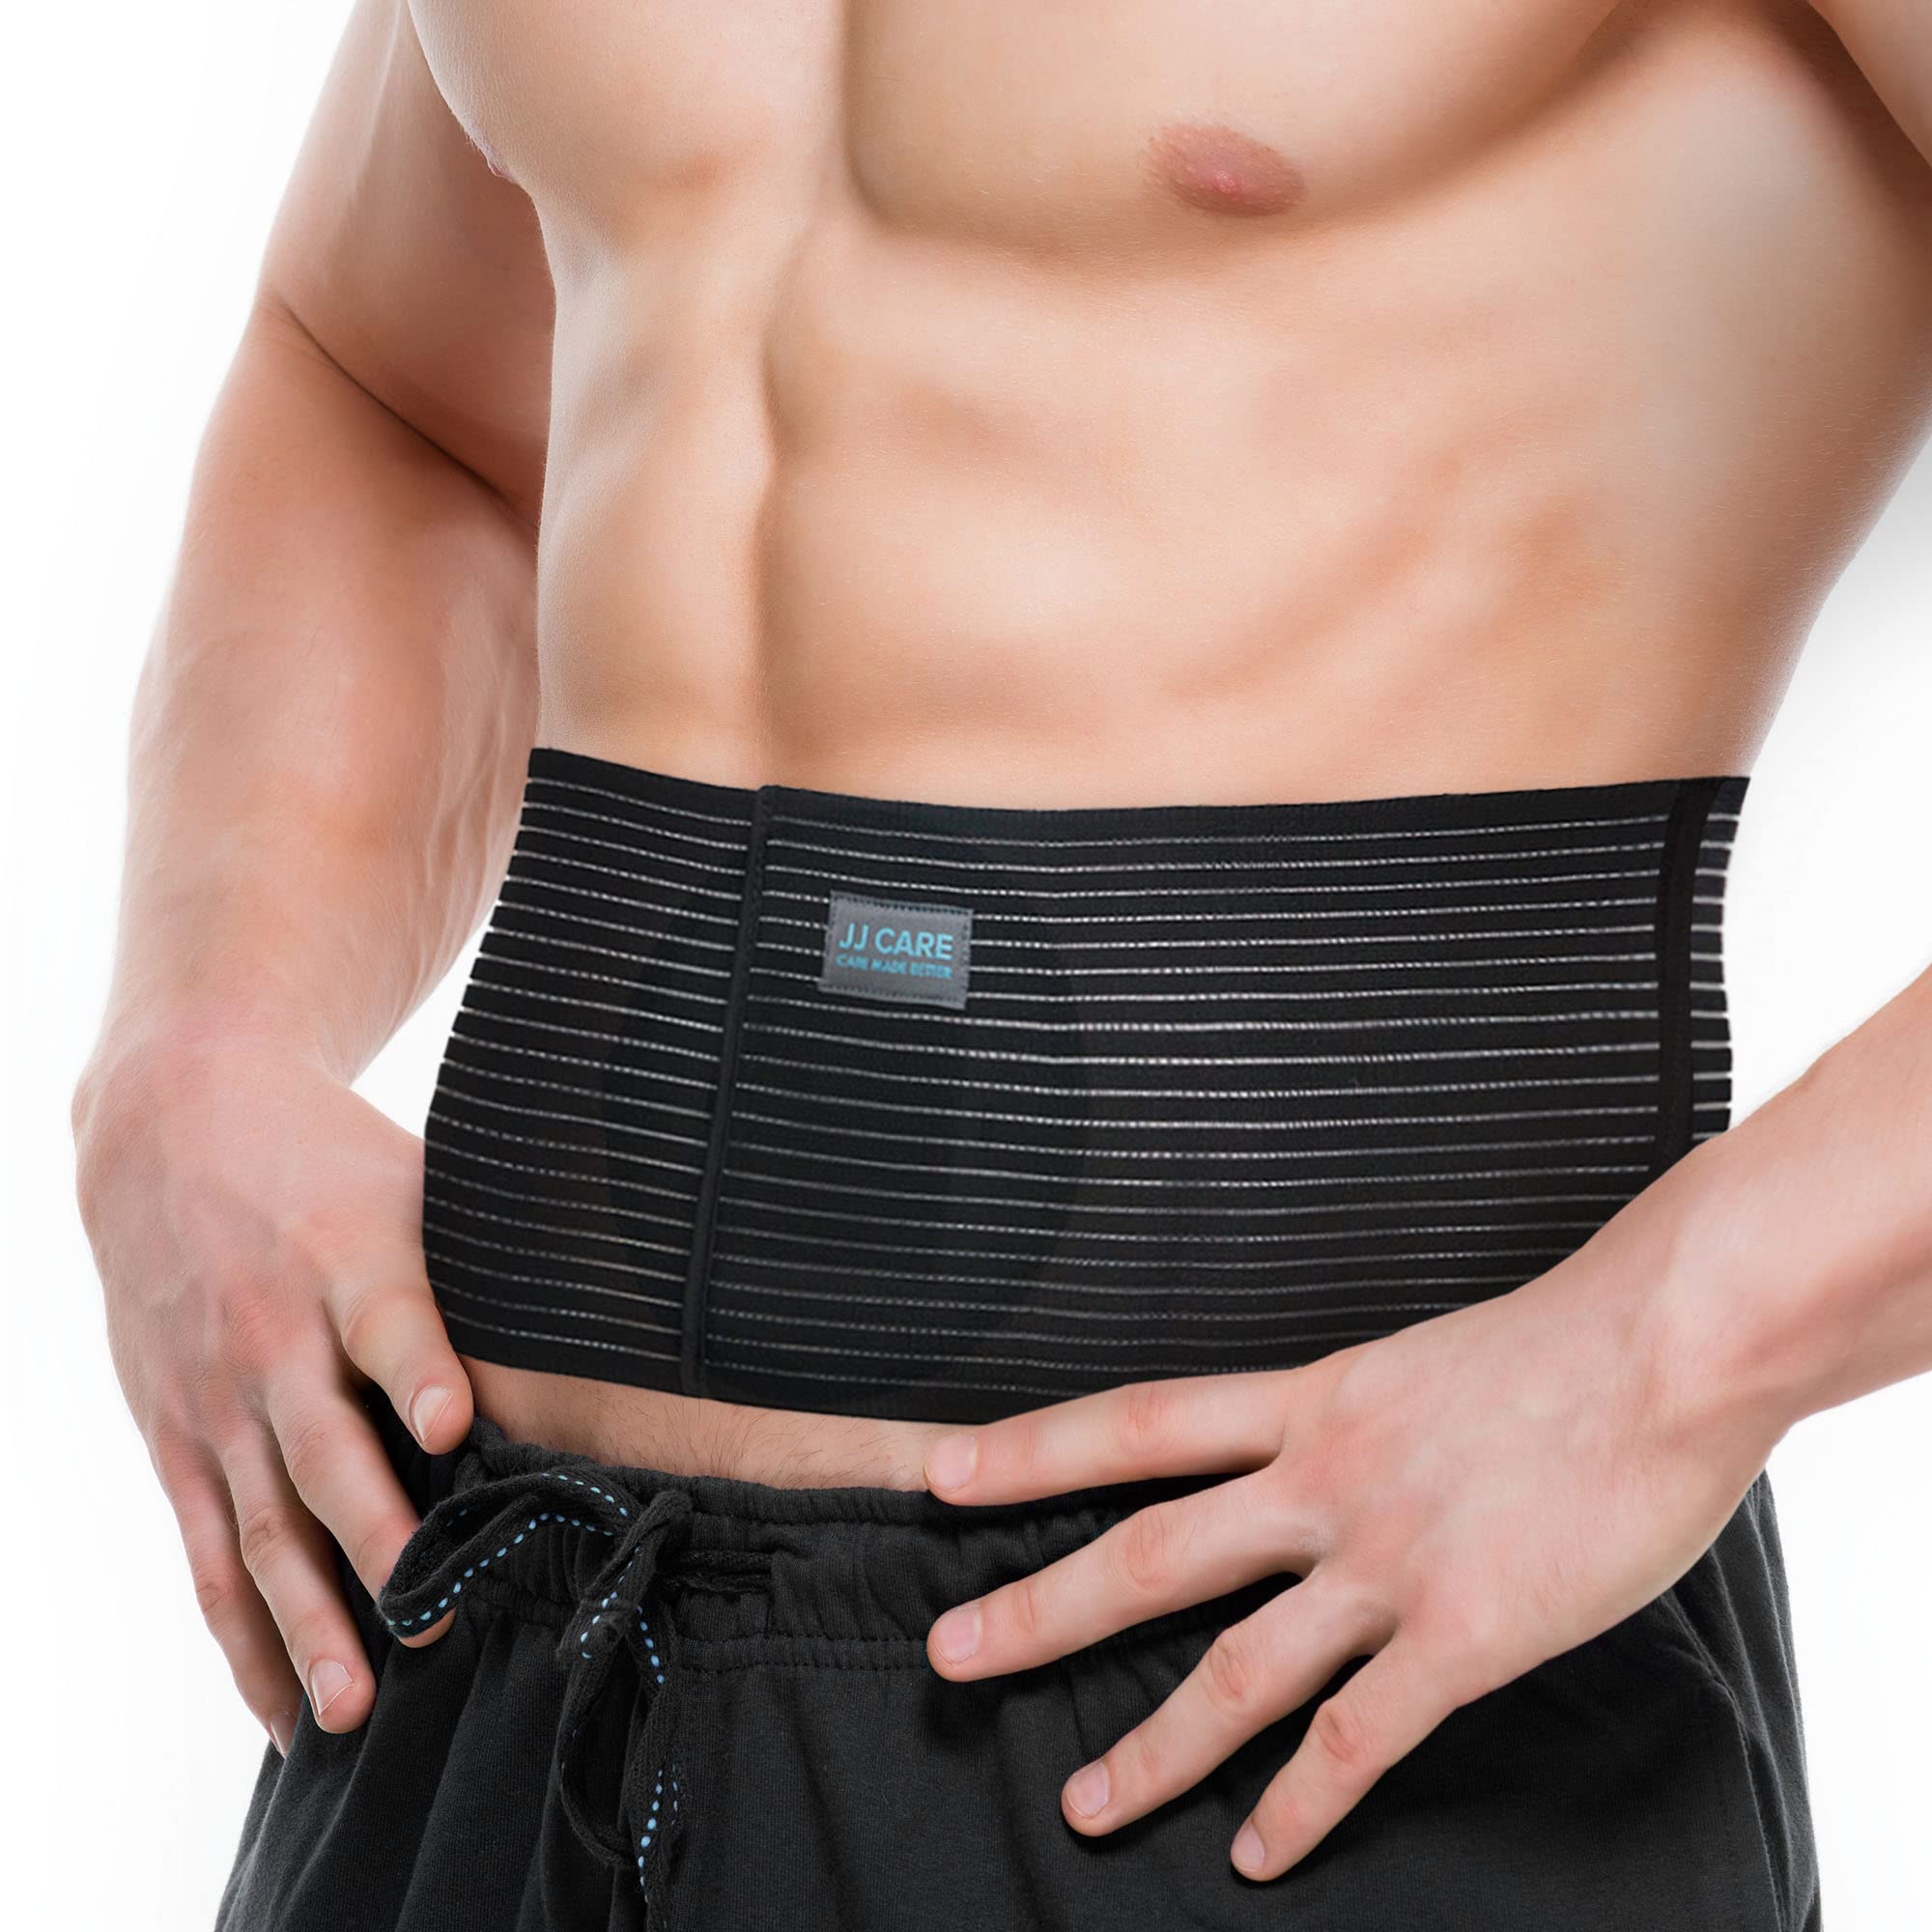 Umbilical Hernia Belt for Men and Women - Abdominal Support Binder